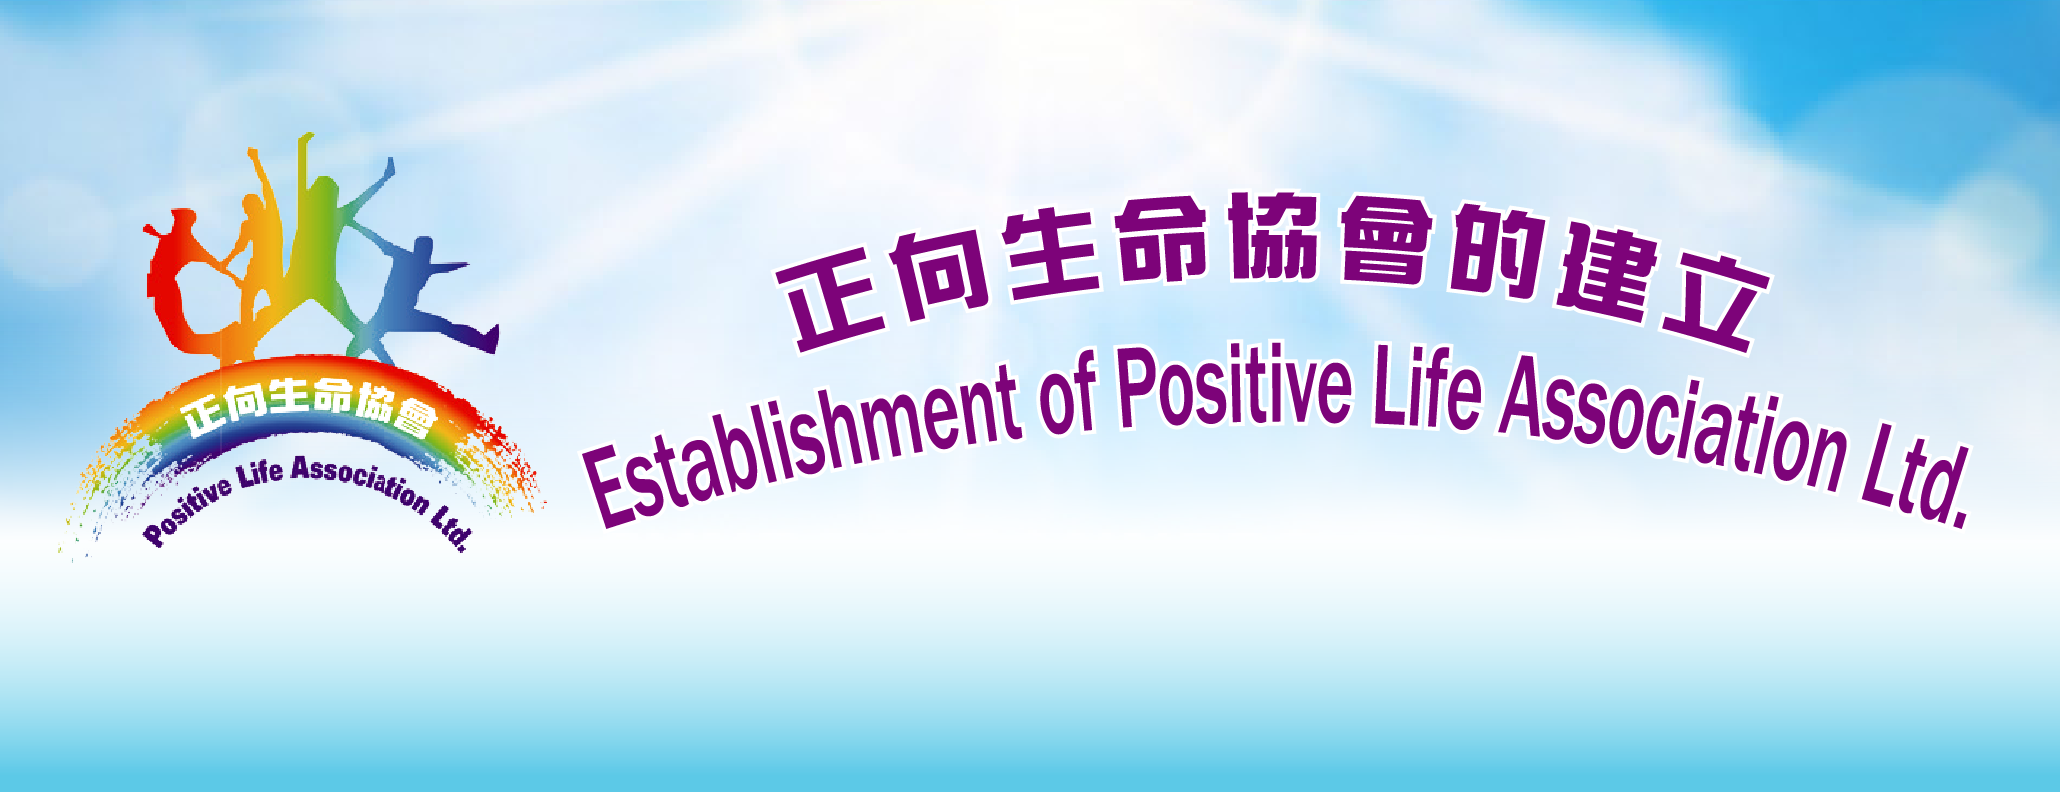 Establishment of PLA